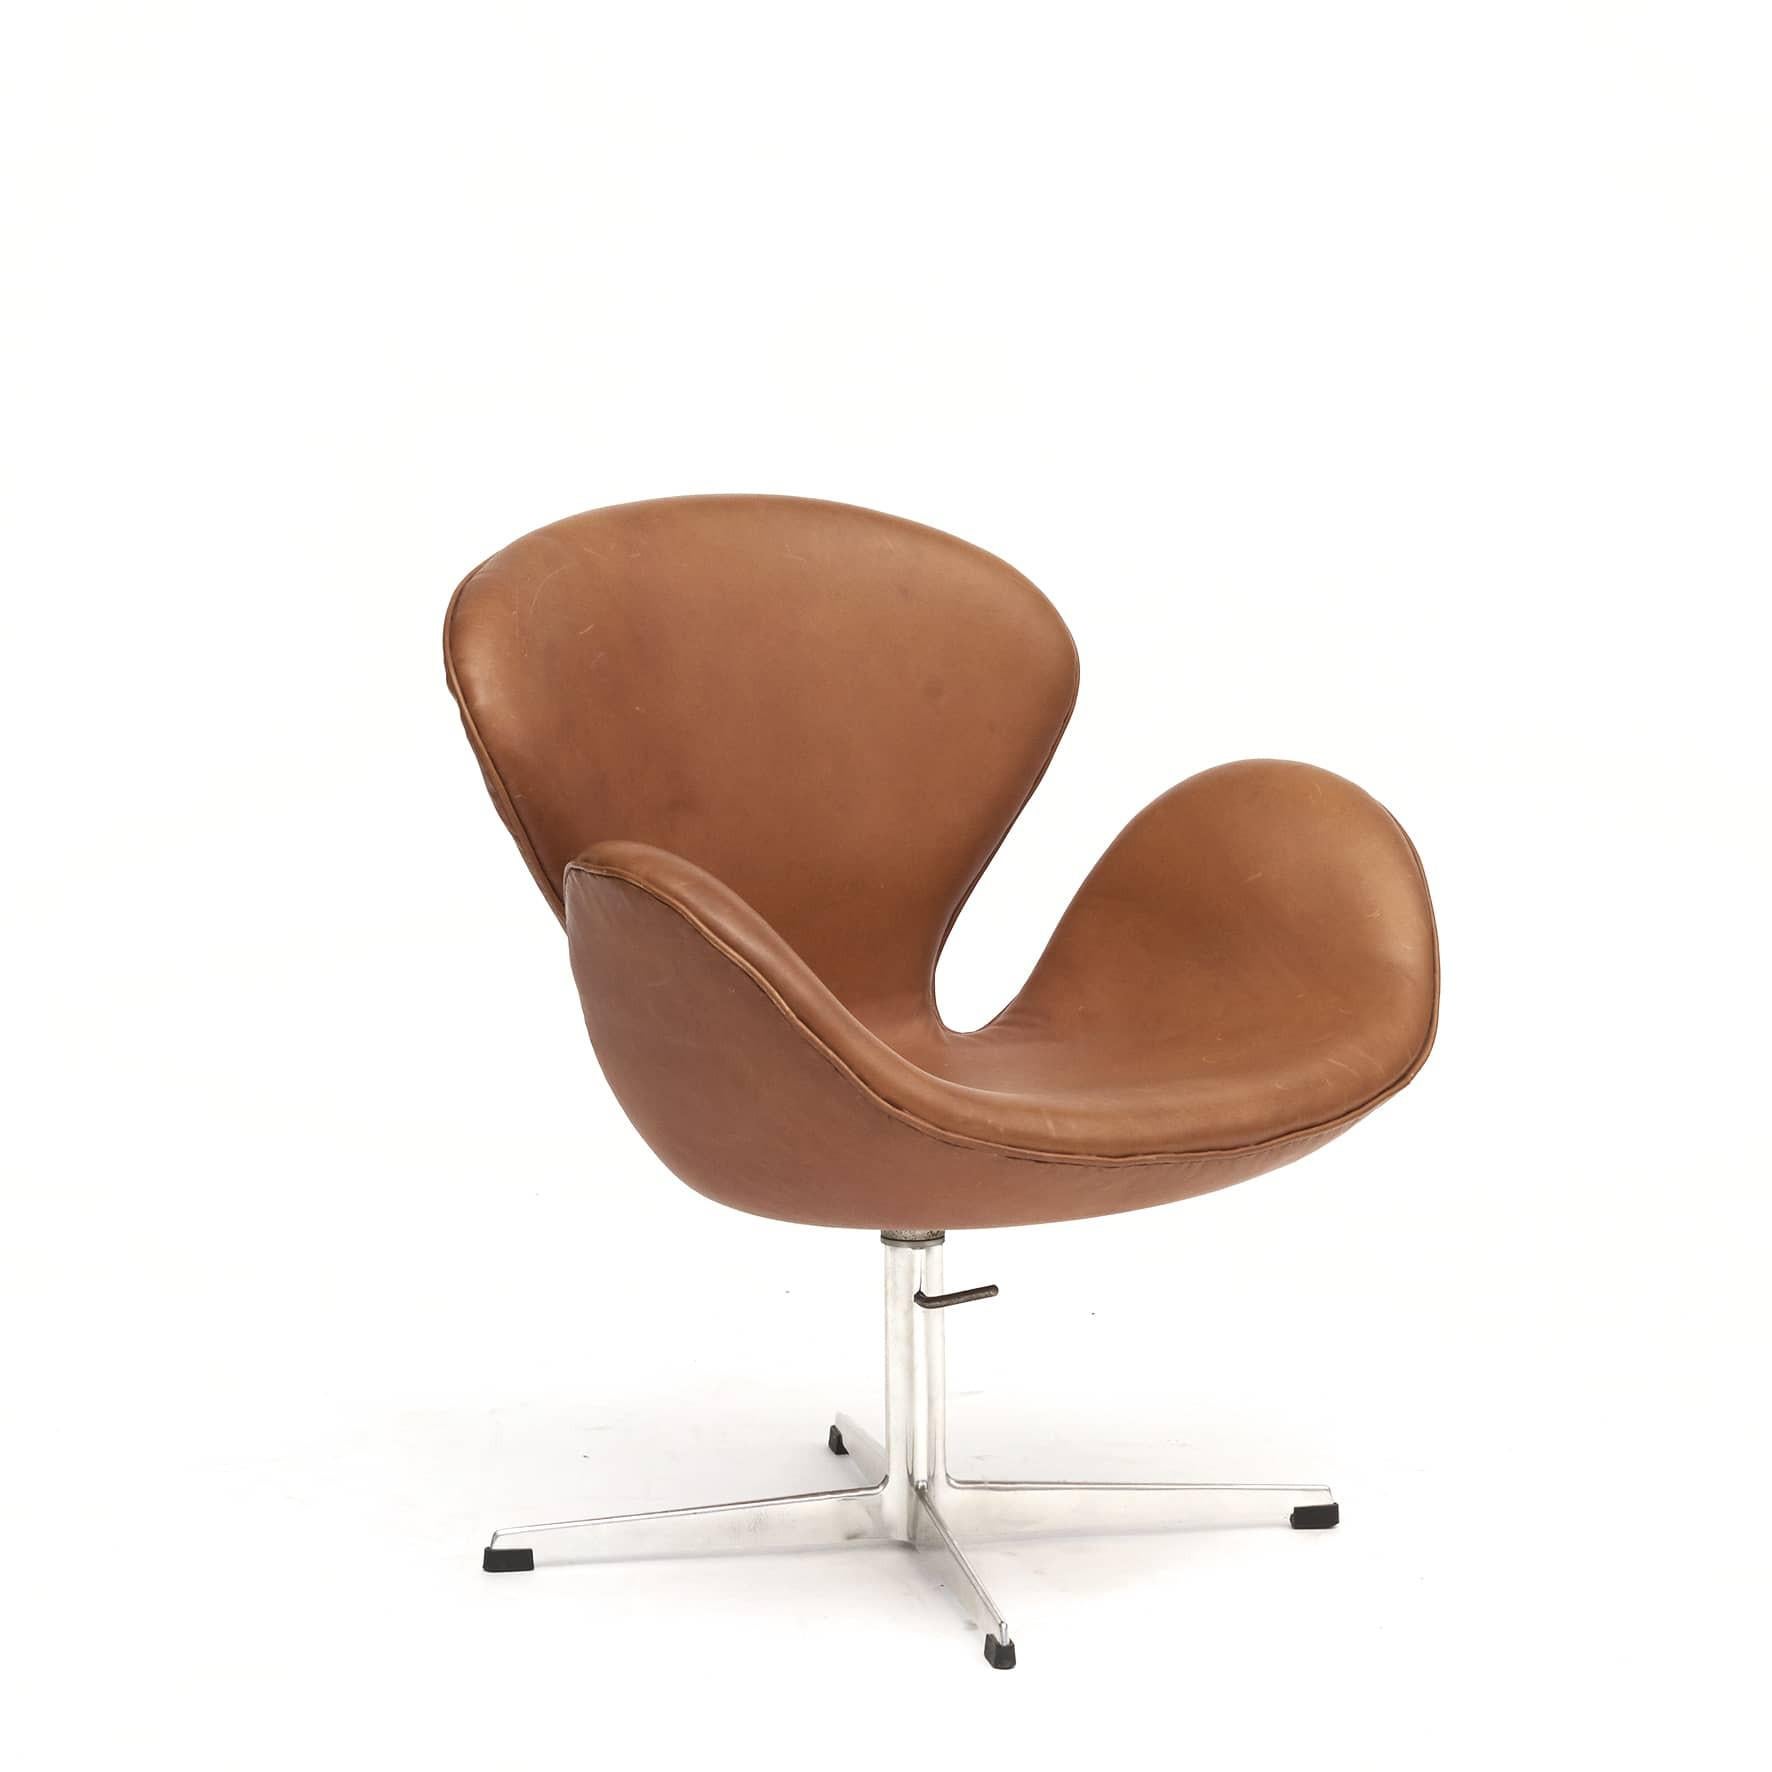 Arne Jacobsen.
Svanen (Swan) AJ 3220, aluminum frame with adjustable height.
Original leather in 